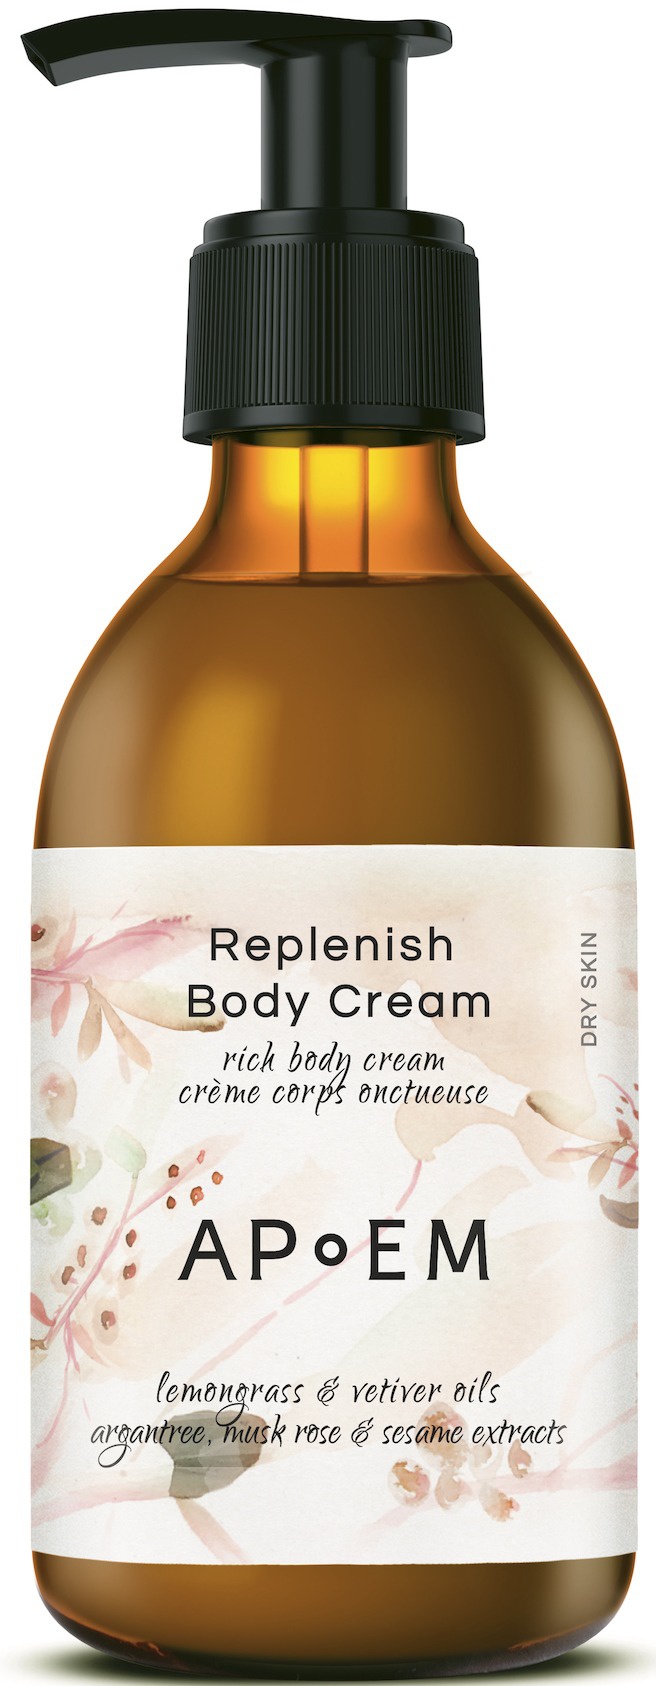 Apoem Replenish Lemongrass Body Cream